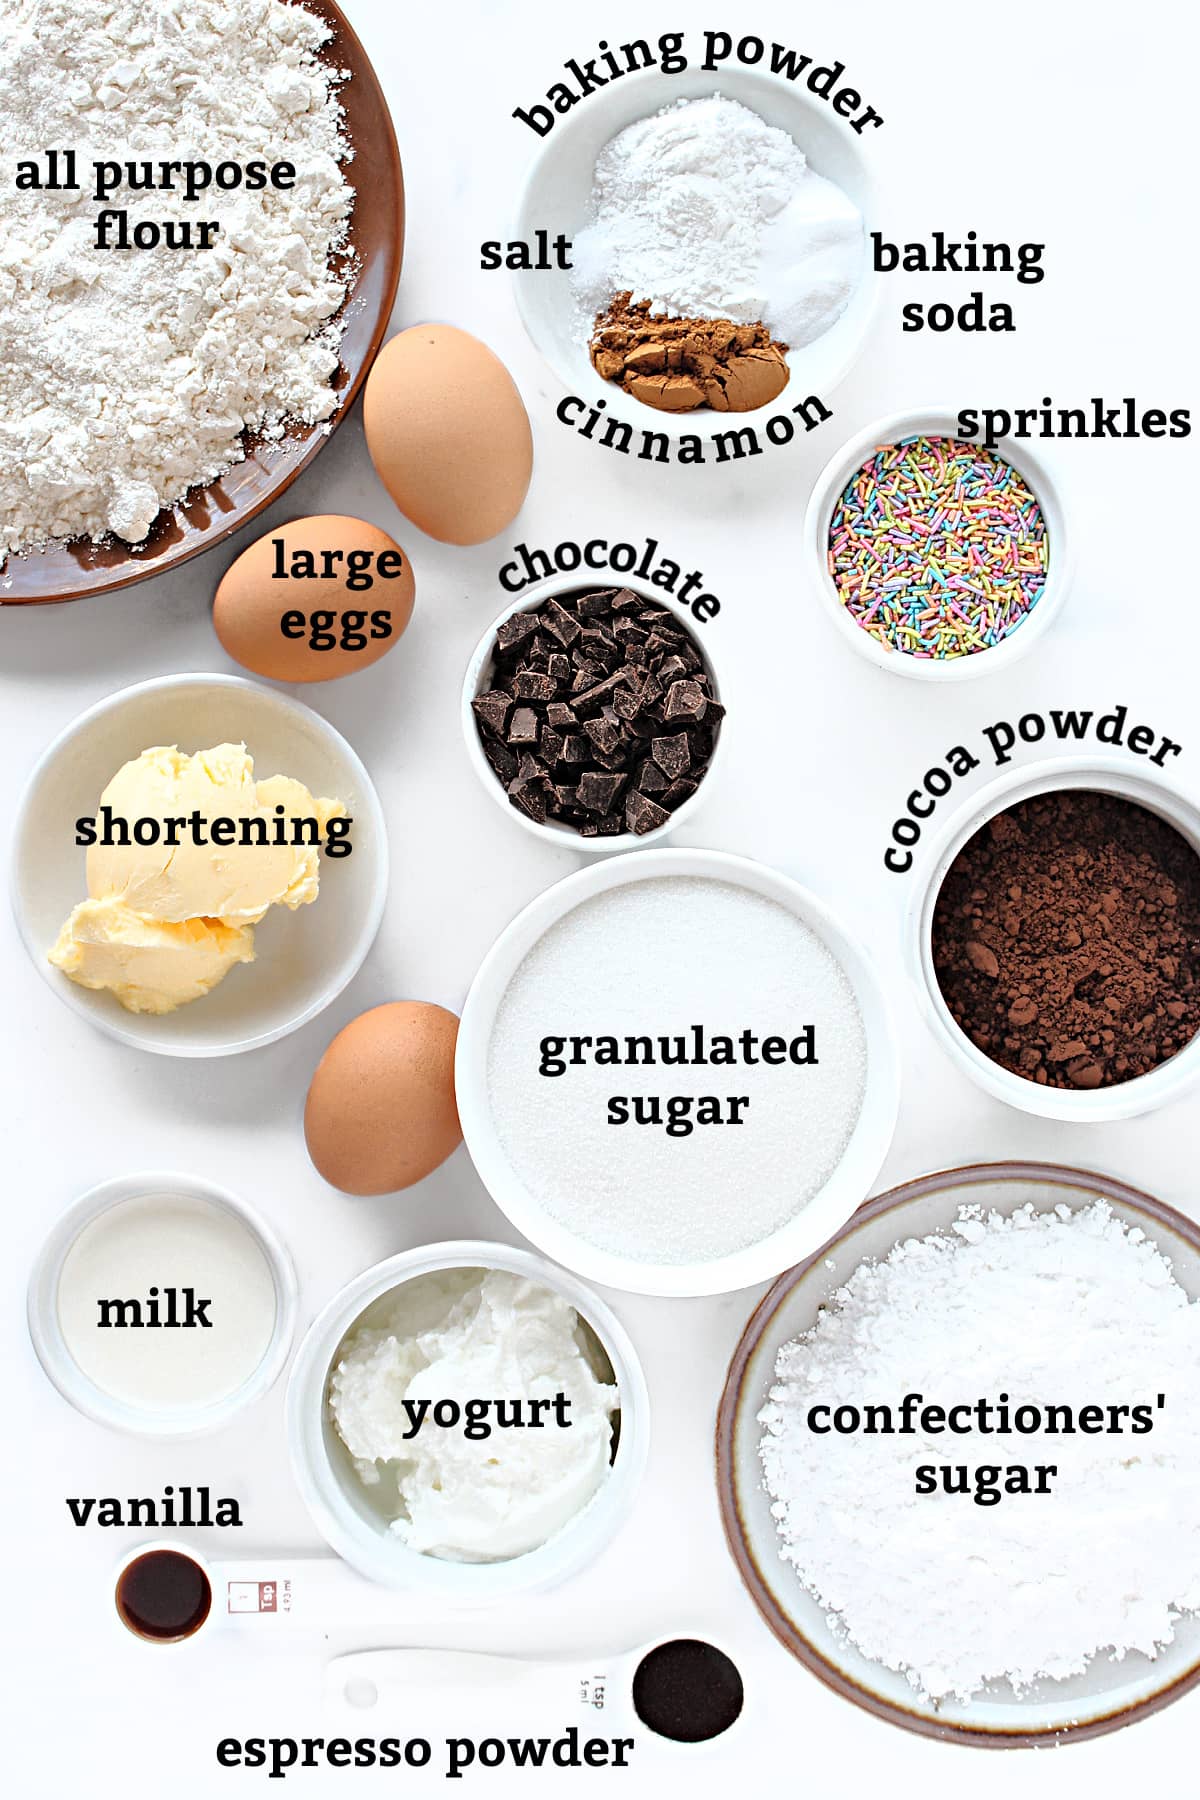 Ingredients: flour, eggs, shortening sugar, chocolate , cinnamon, baking powder, soda, cocoa, yogurt, milk, vanilla, espresso powder.